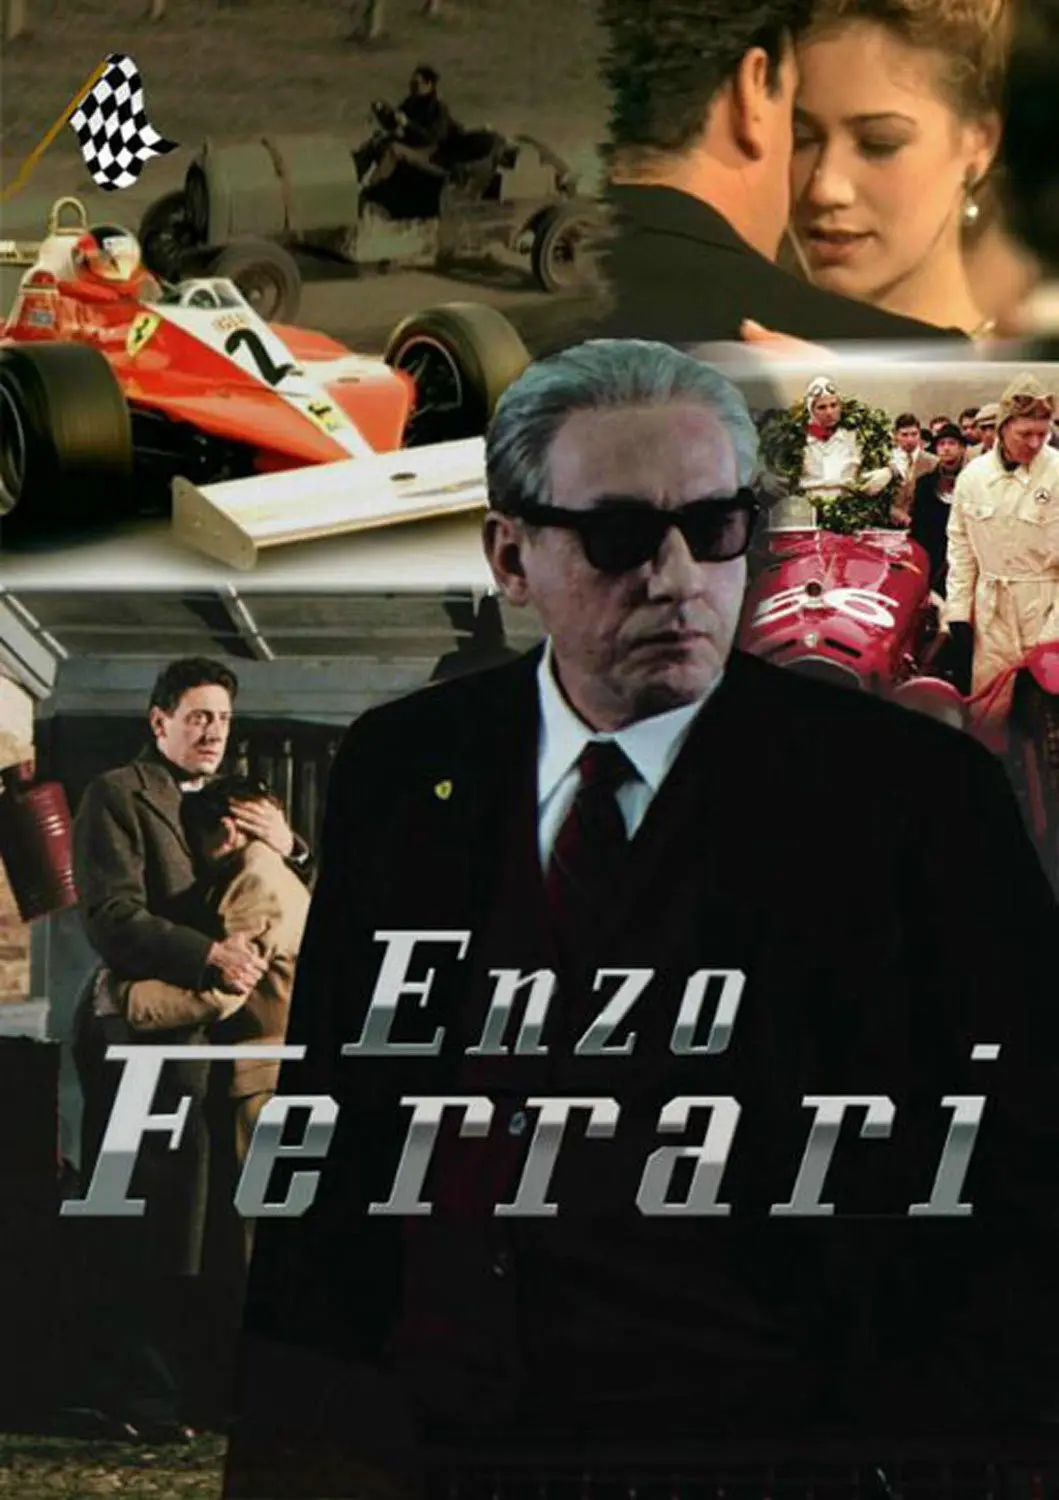 ford v ferrari where to watch - Is Ferrari on Netflix or Amazon Prime